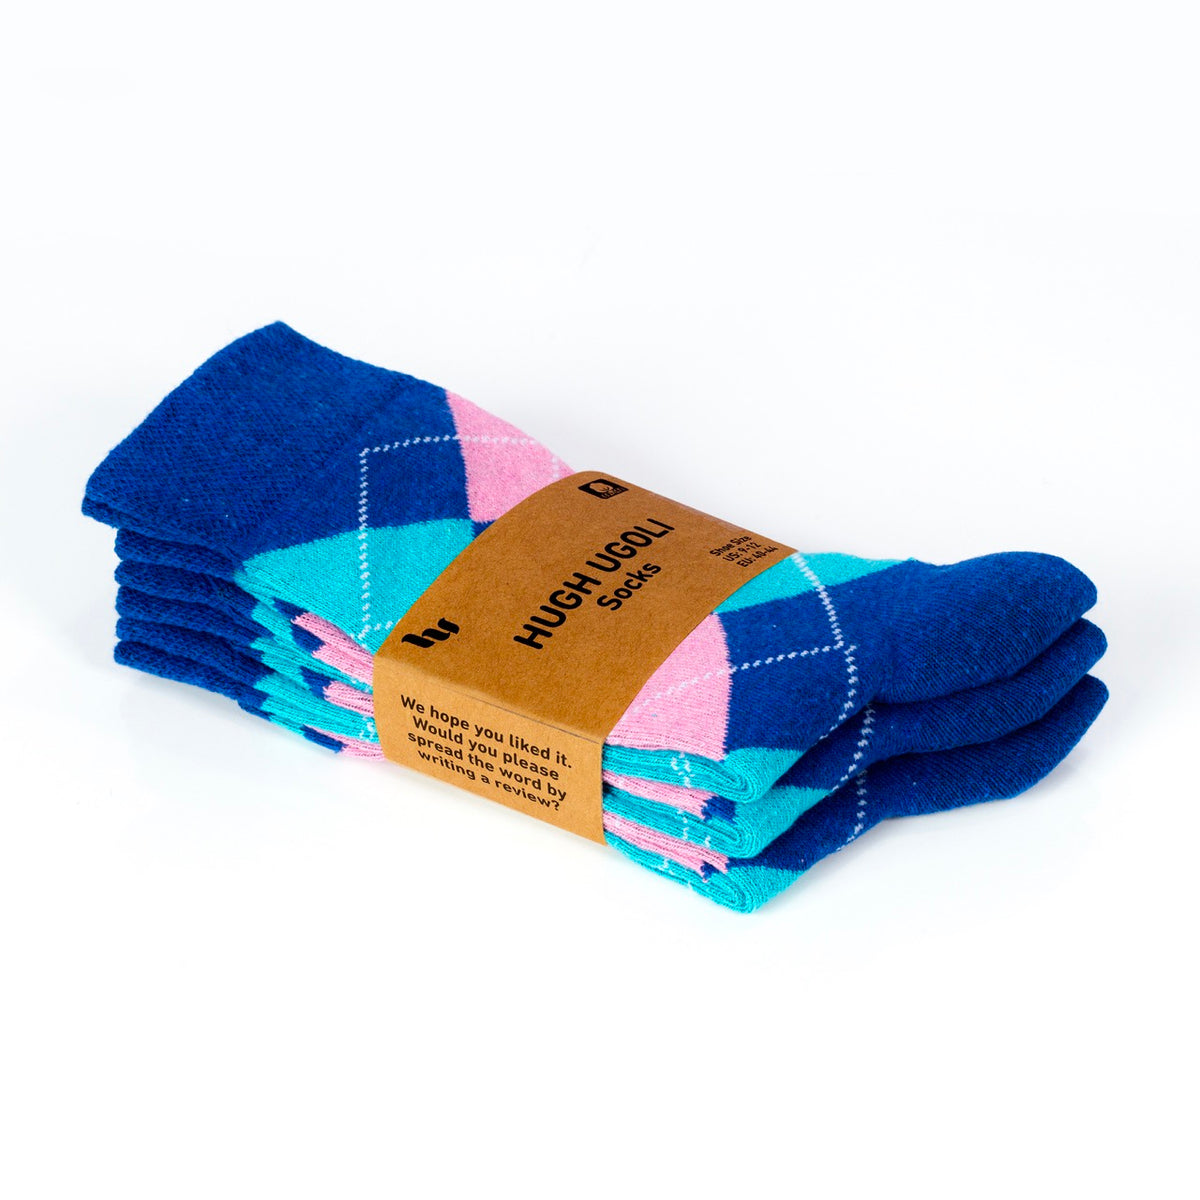 Colorful Cotton Dress Crew Argyle Socks for Women, 4 Pairs